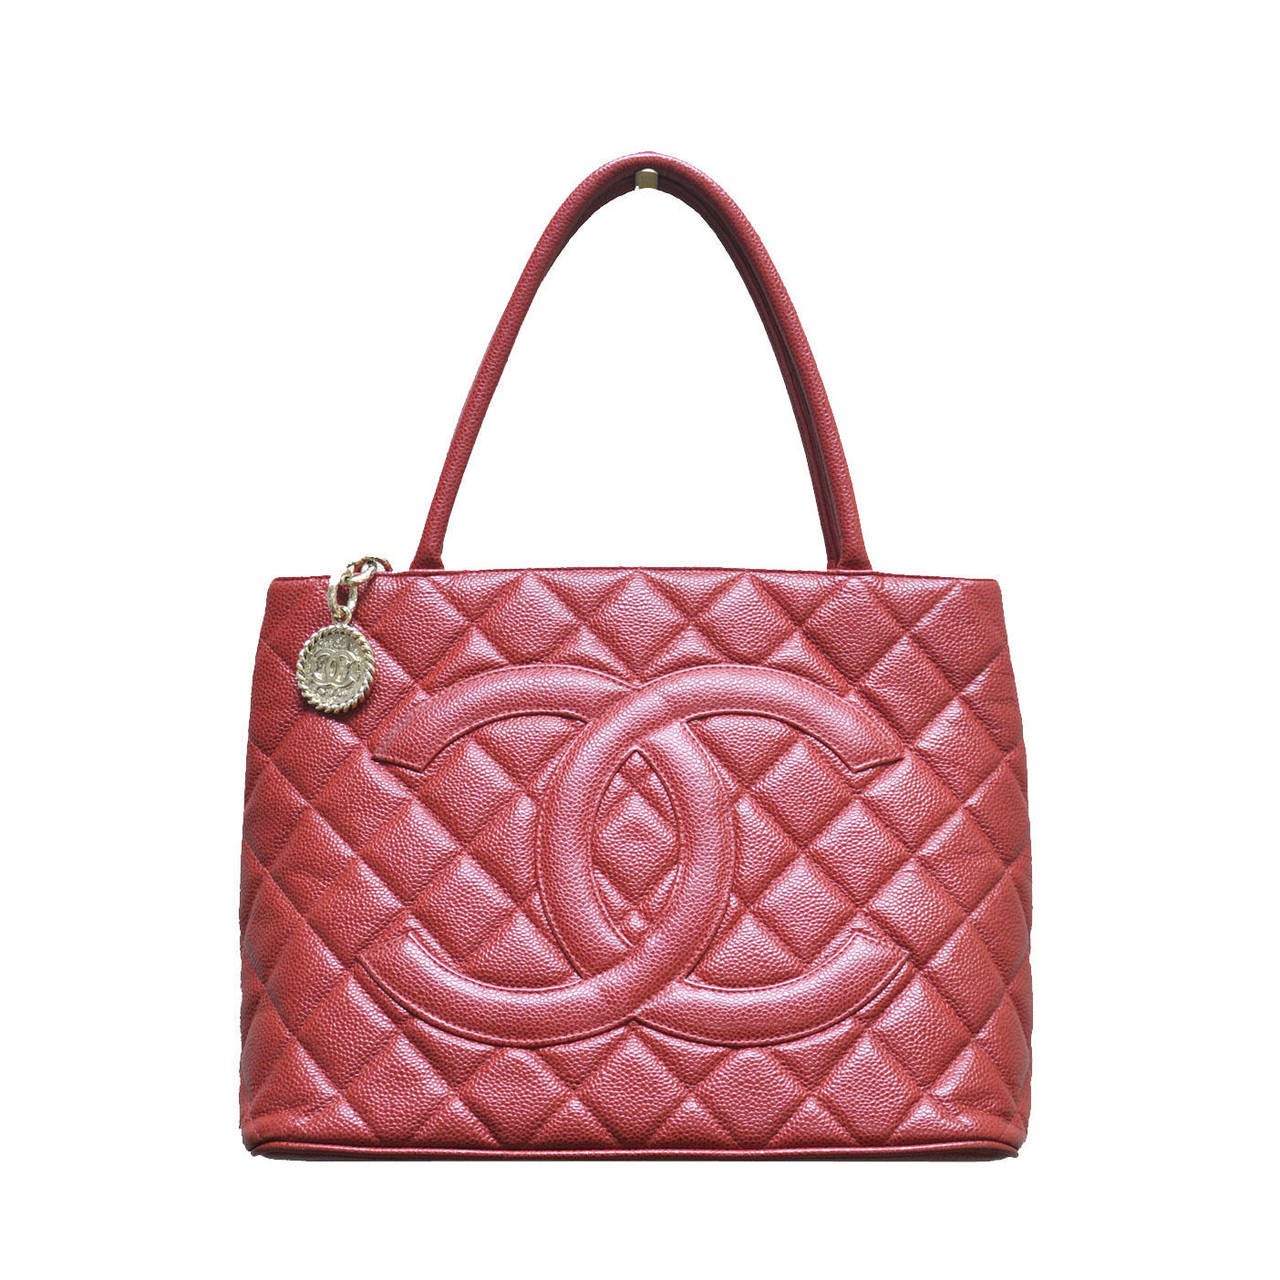 Chanel Red Medallion Caviar Tote Shoulder Handbag